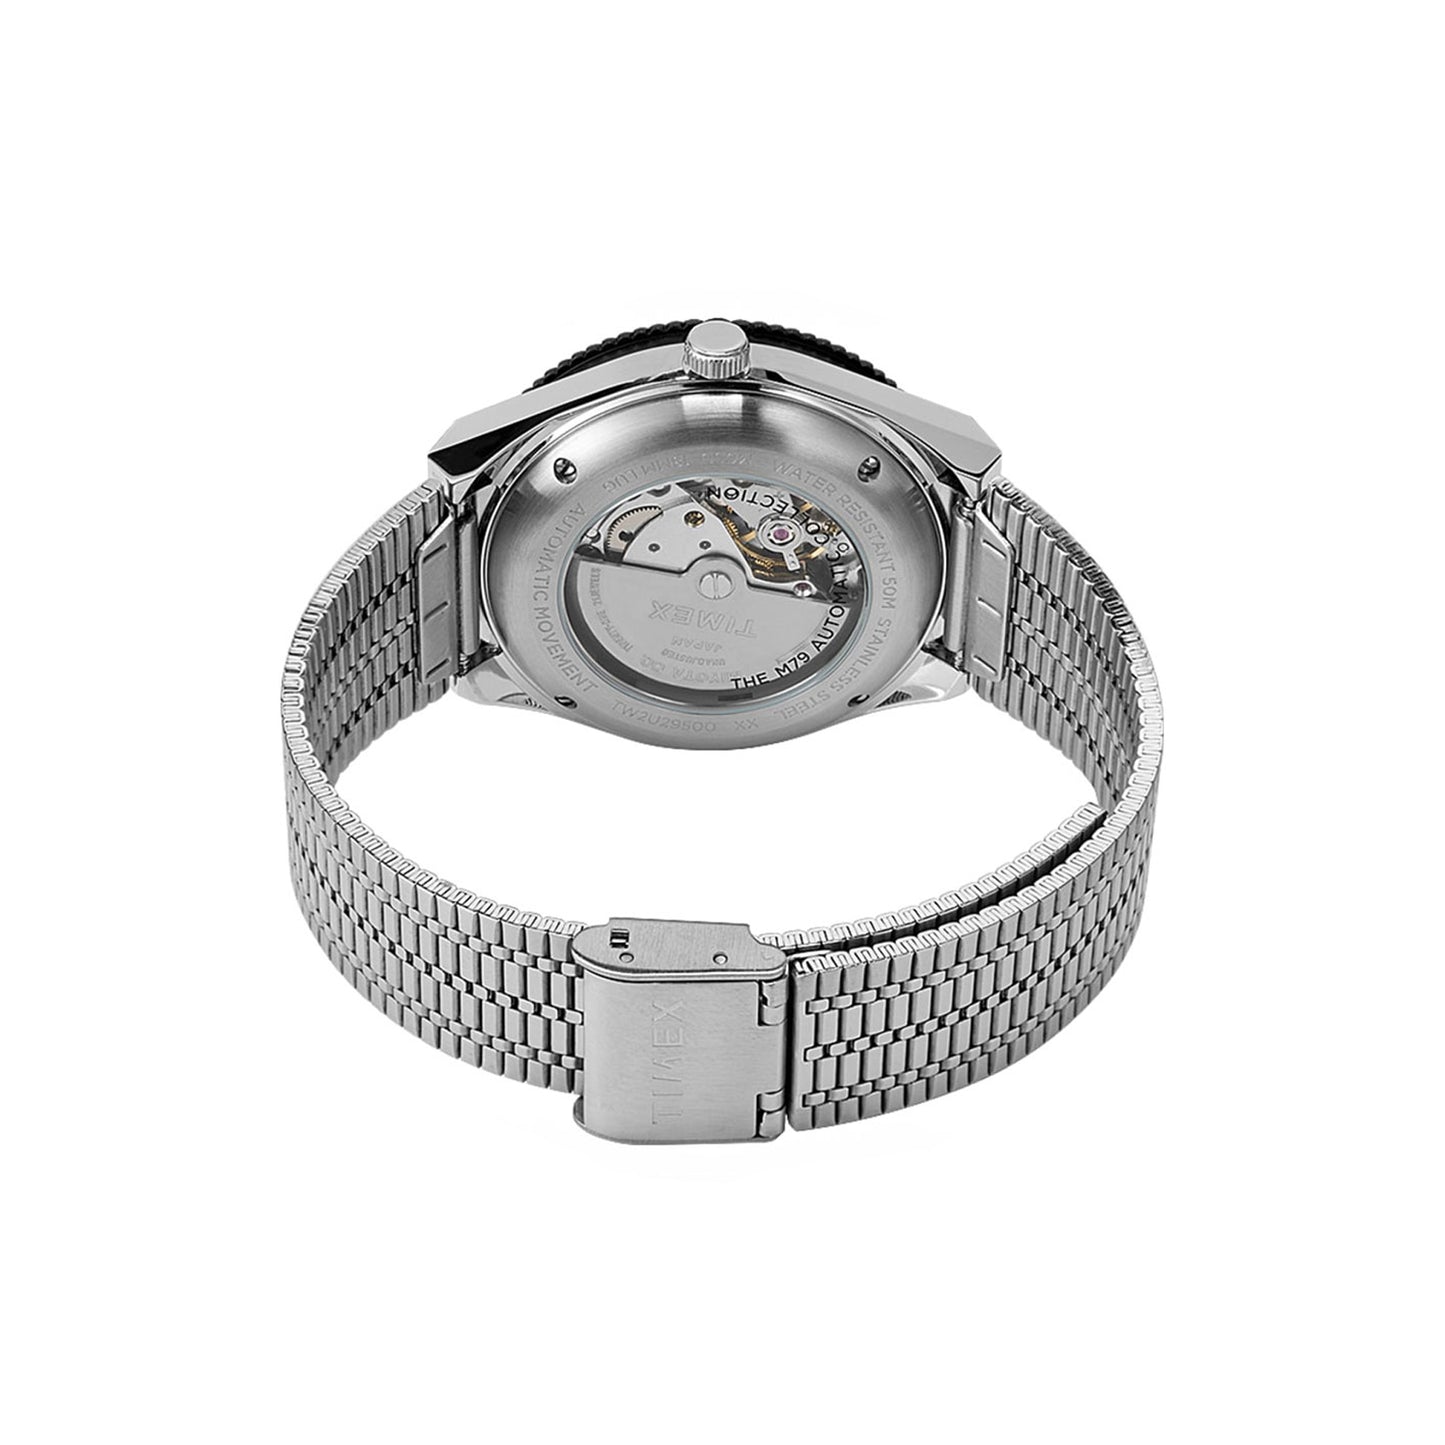 Timex M79 Black Bezel Automatic Watch